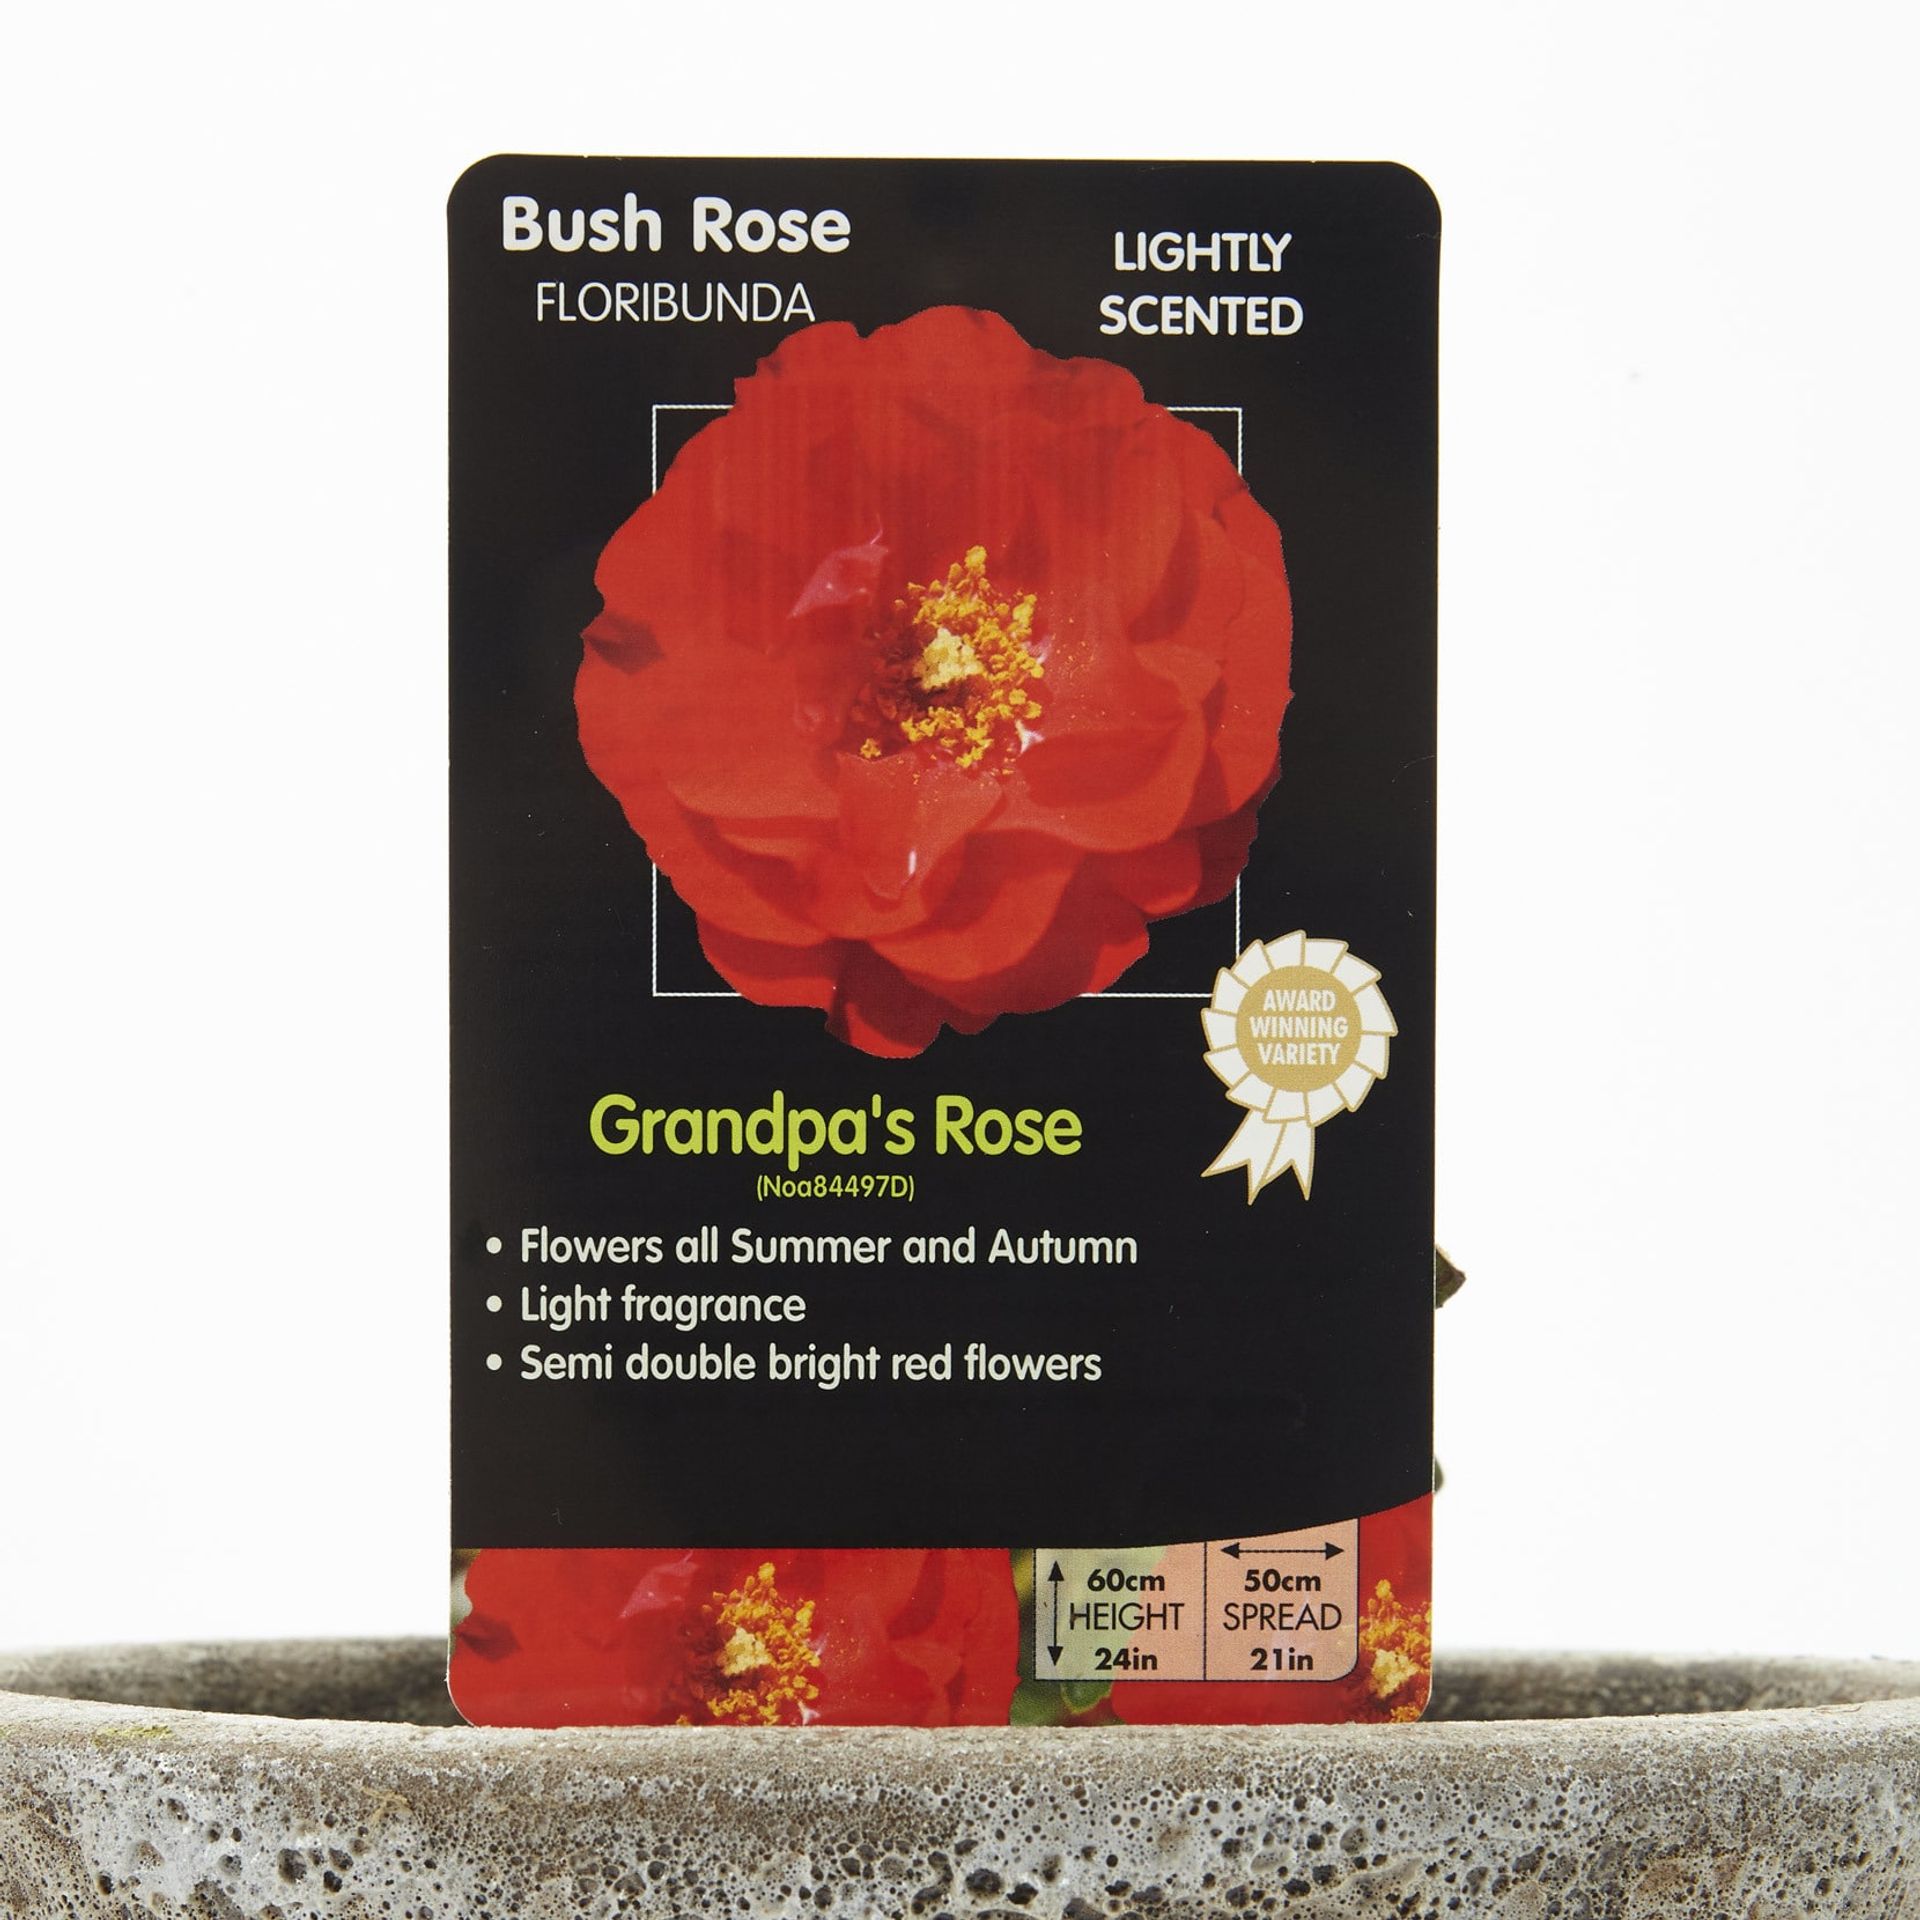 Bush Rose 'Grandpa's Rose'